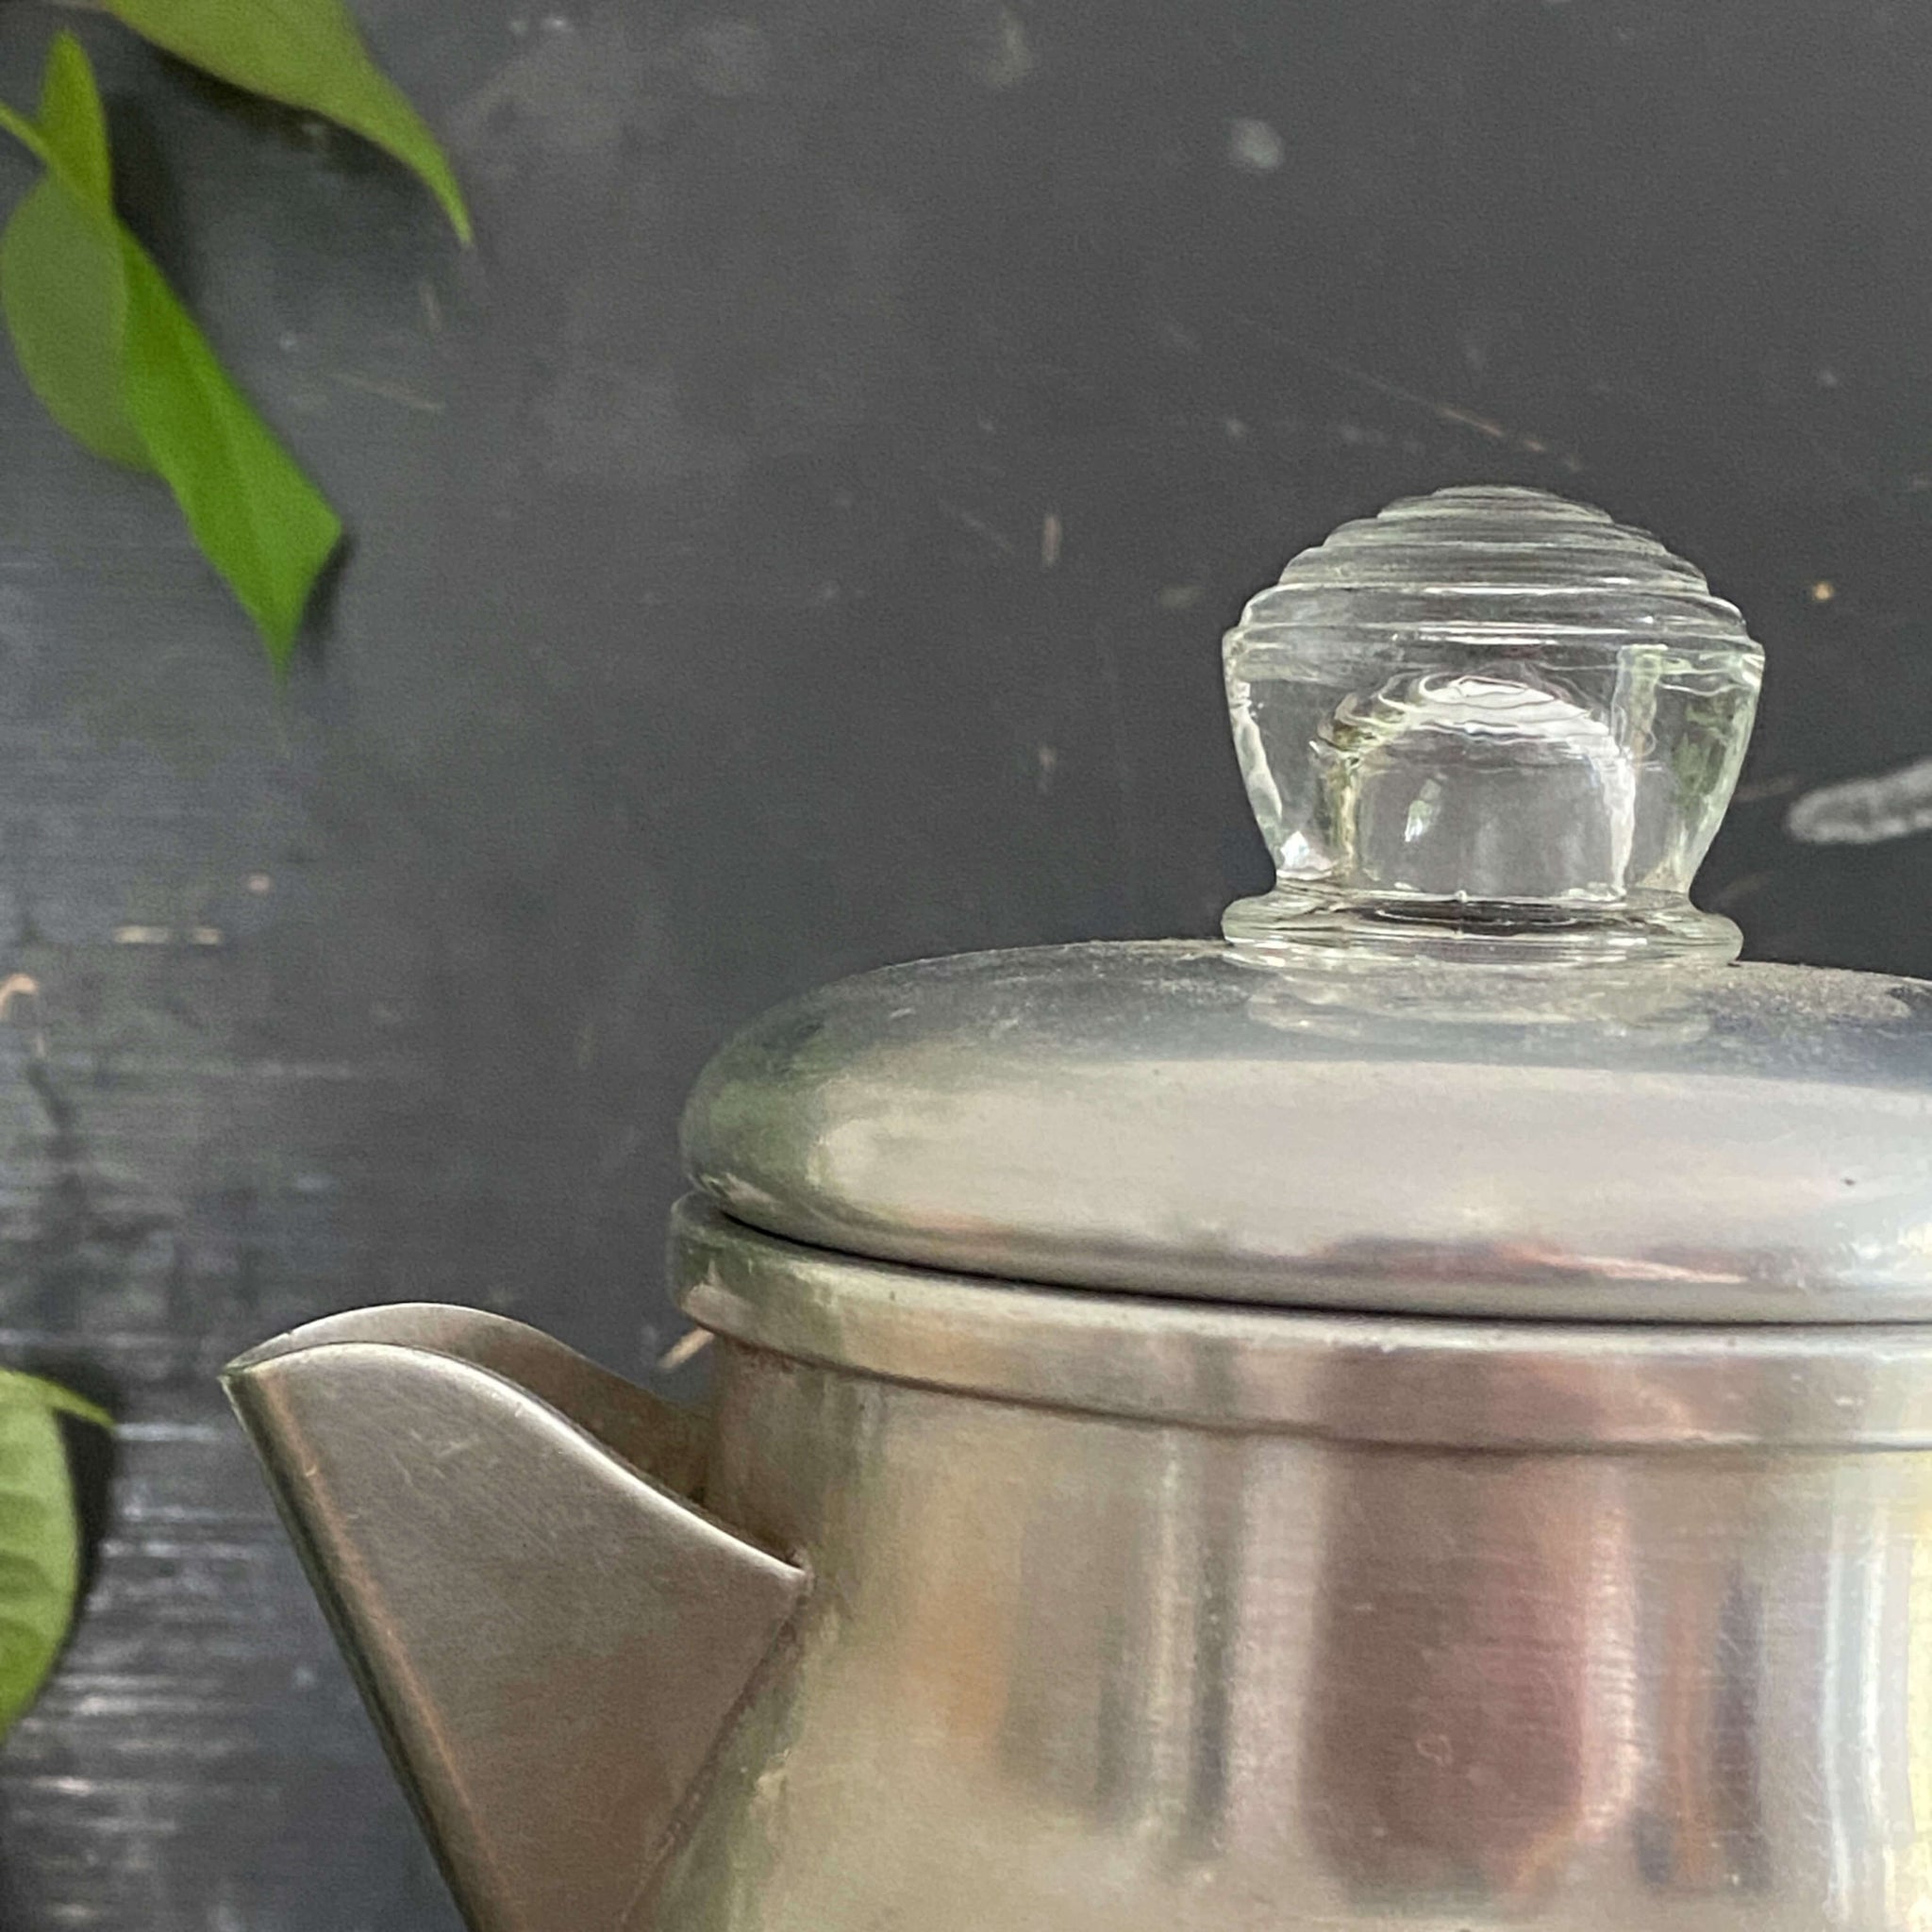 vintage WearEver aluminum stovetop dripolator coffeepot 12 cup coffee maker